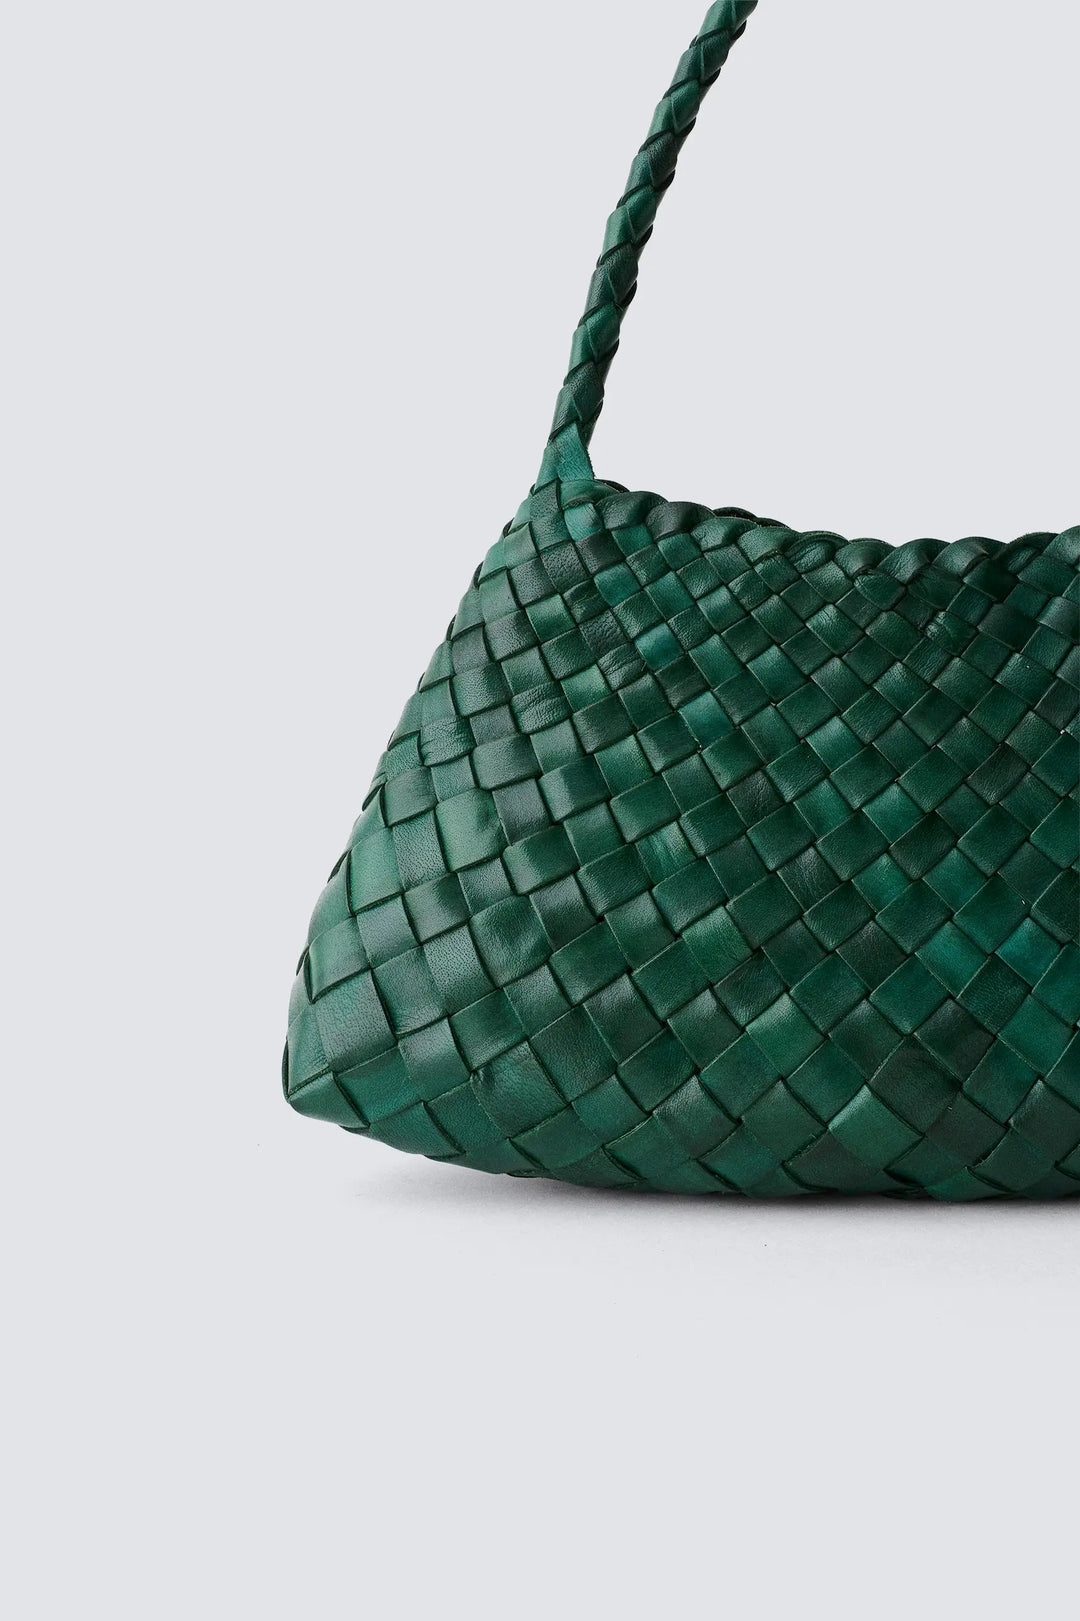 Dragon Diffusion - Woven Leather Bag Handmade - Rosanna Forest Green